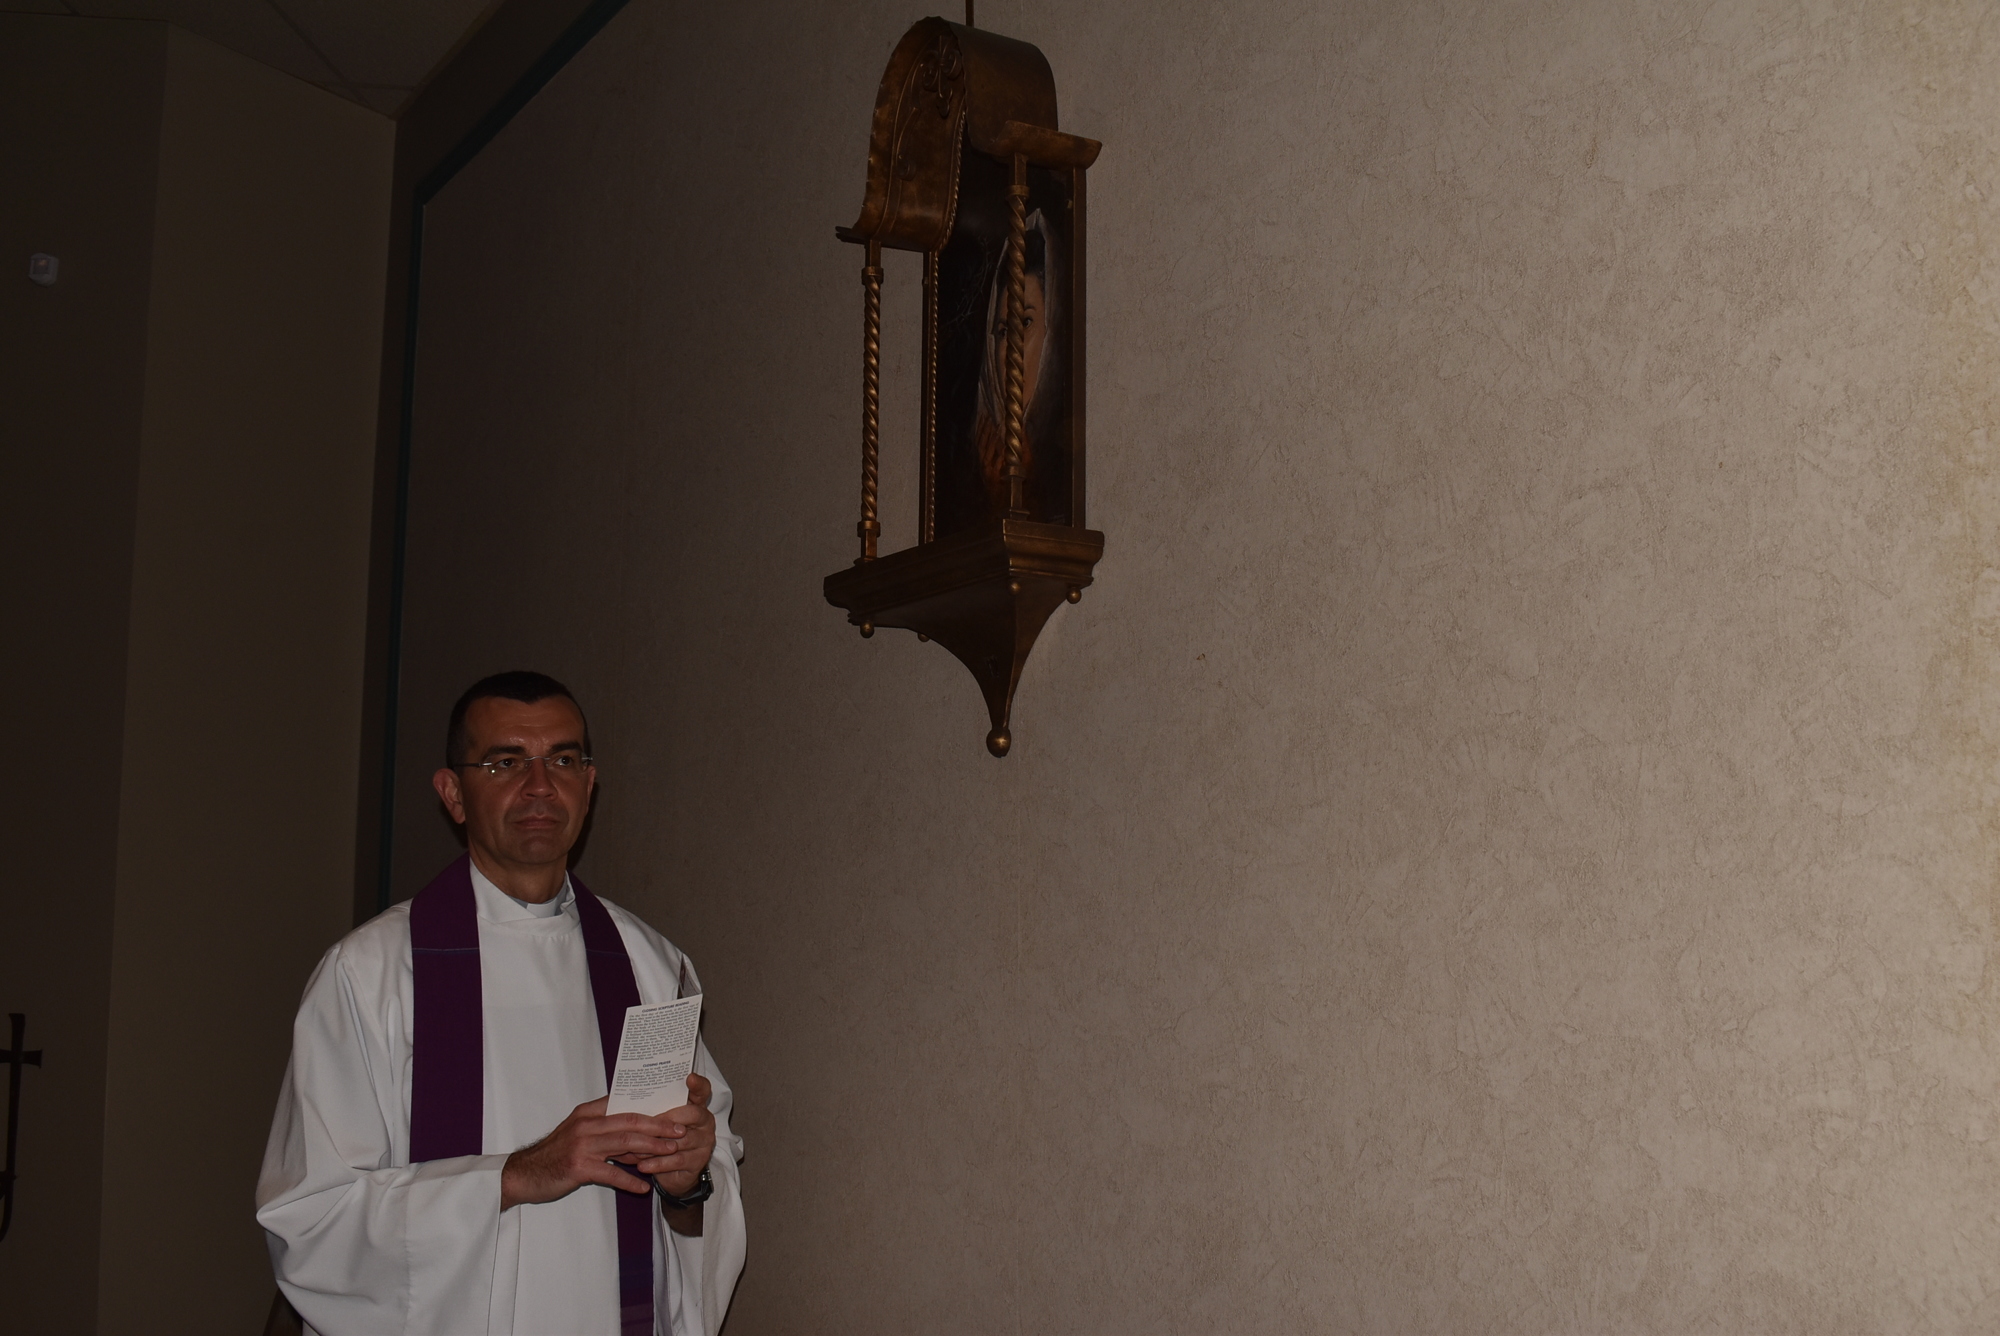 Rev. Robert Dziedziak took his congregation through every station of the cross on Good Friday.